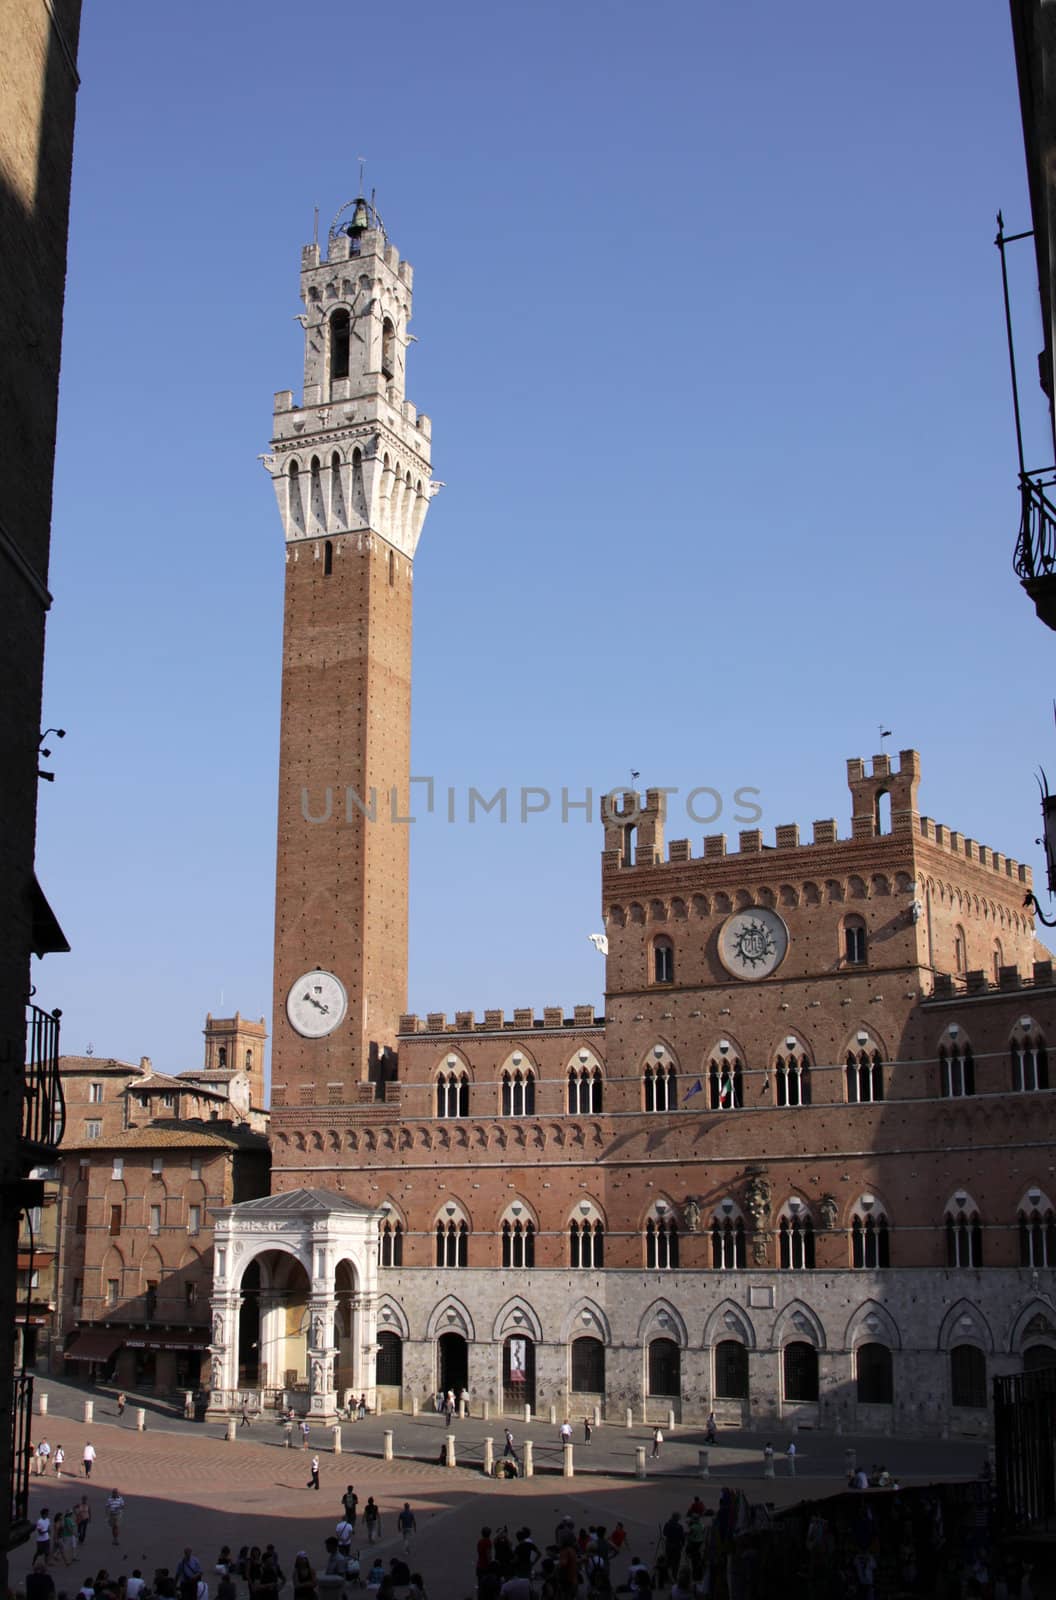 The Torre del Mangia and Palazzo Publico in the Piazza del Campo in Siena, Italy.
